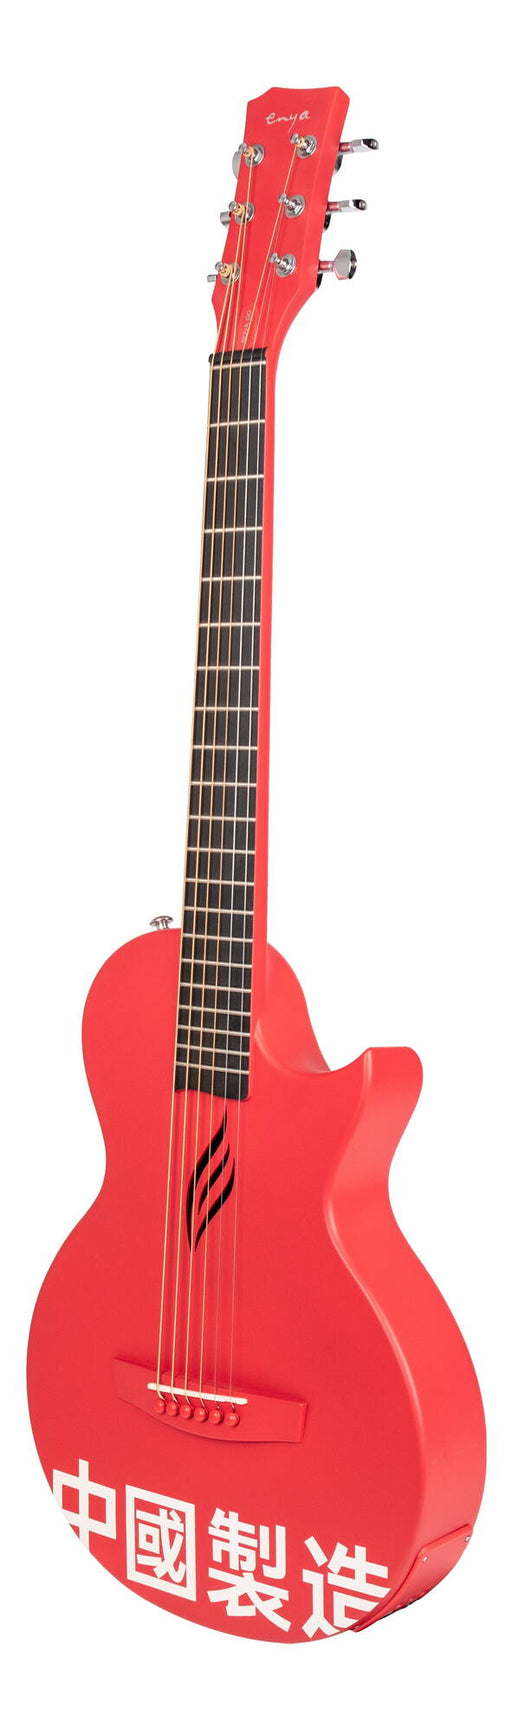 Enya Nova Go 35" Acoustic Smart Guitar Red Pickup